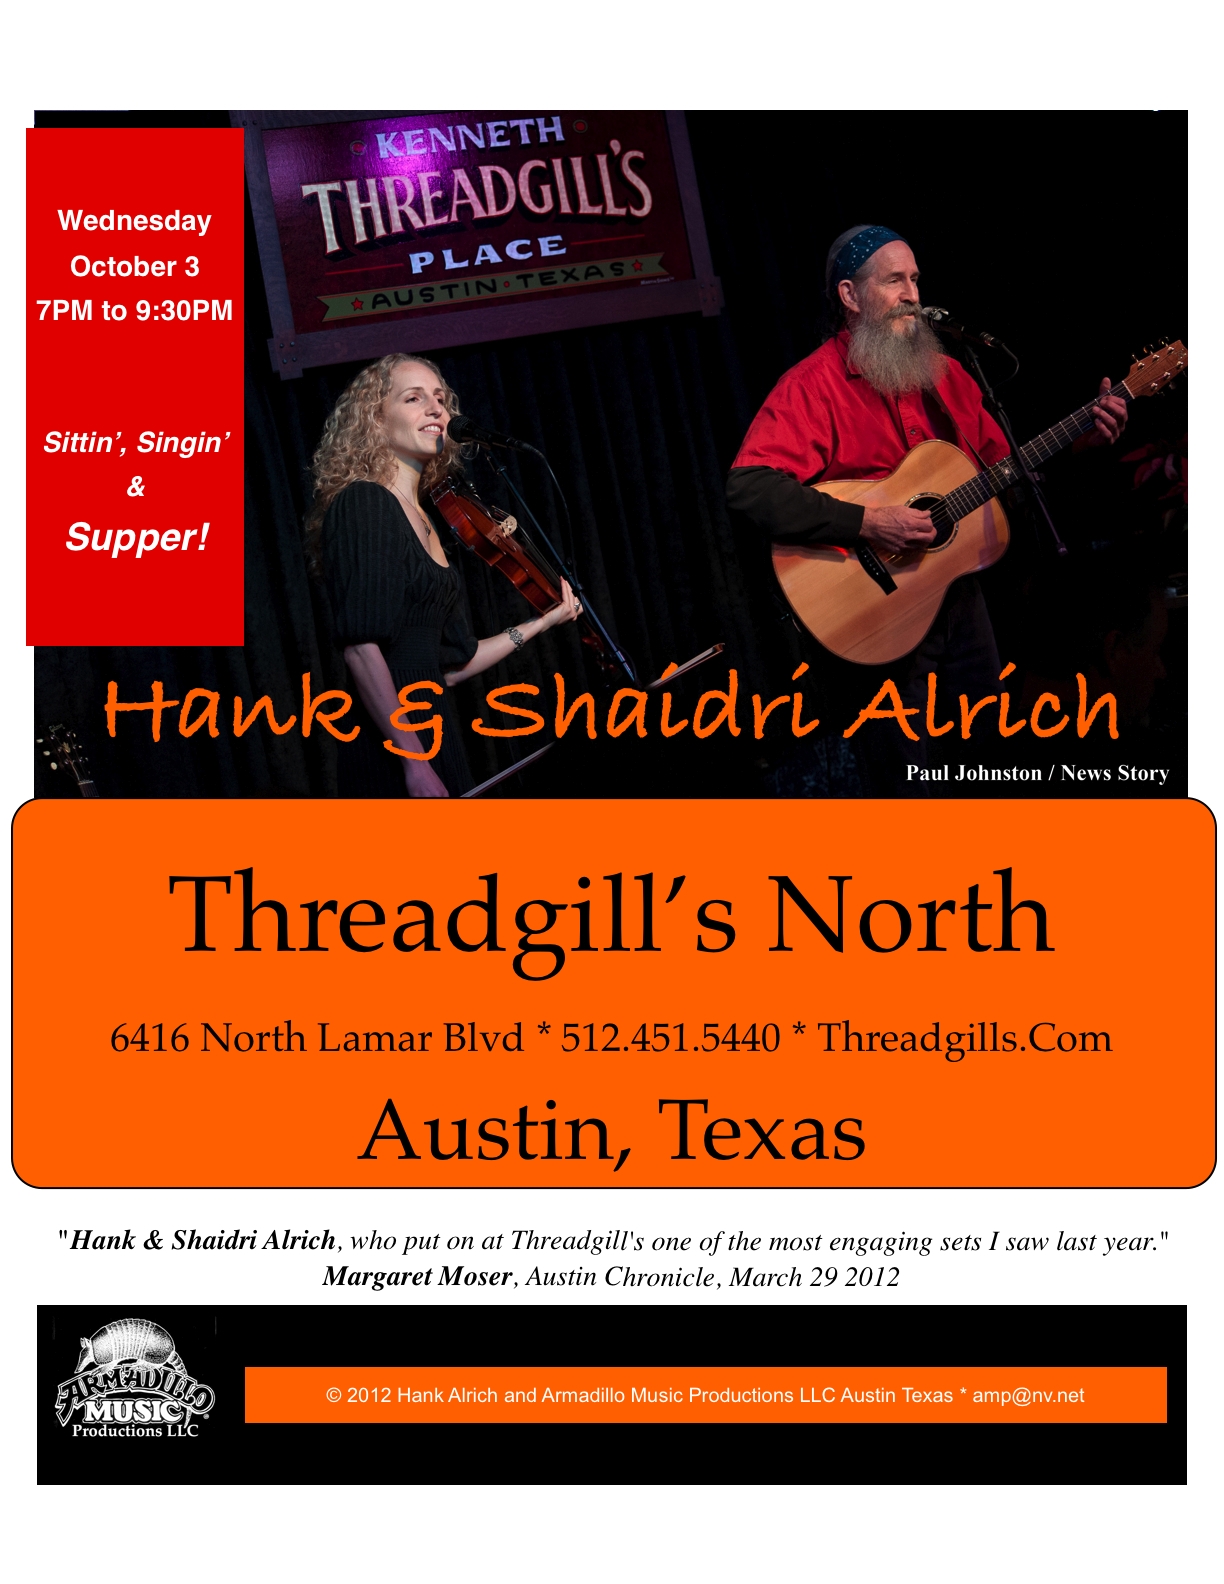 Hank and Shaidri Alrich performing at Threadgills - 6416 N. Lamar Blvd.;Austin, Texas) on October 3, 2012, 7-9:30 PM. - austinnewsstory.com